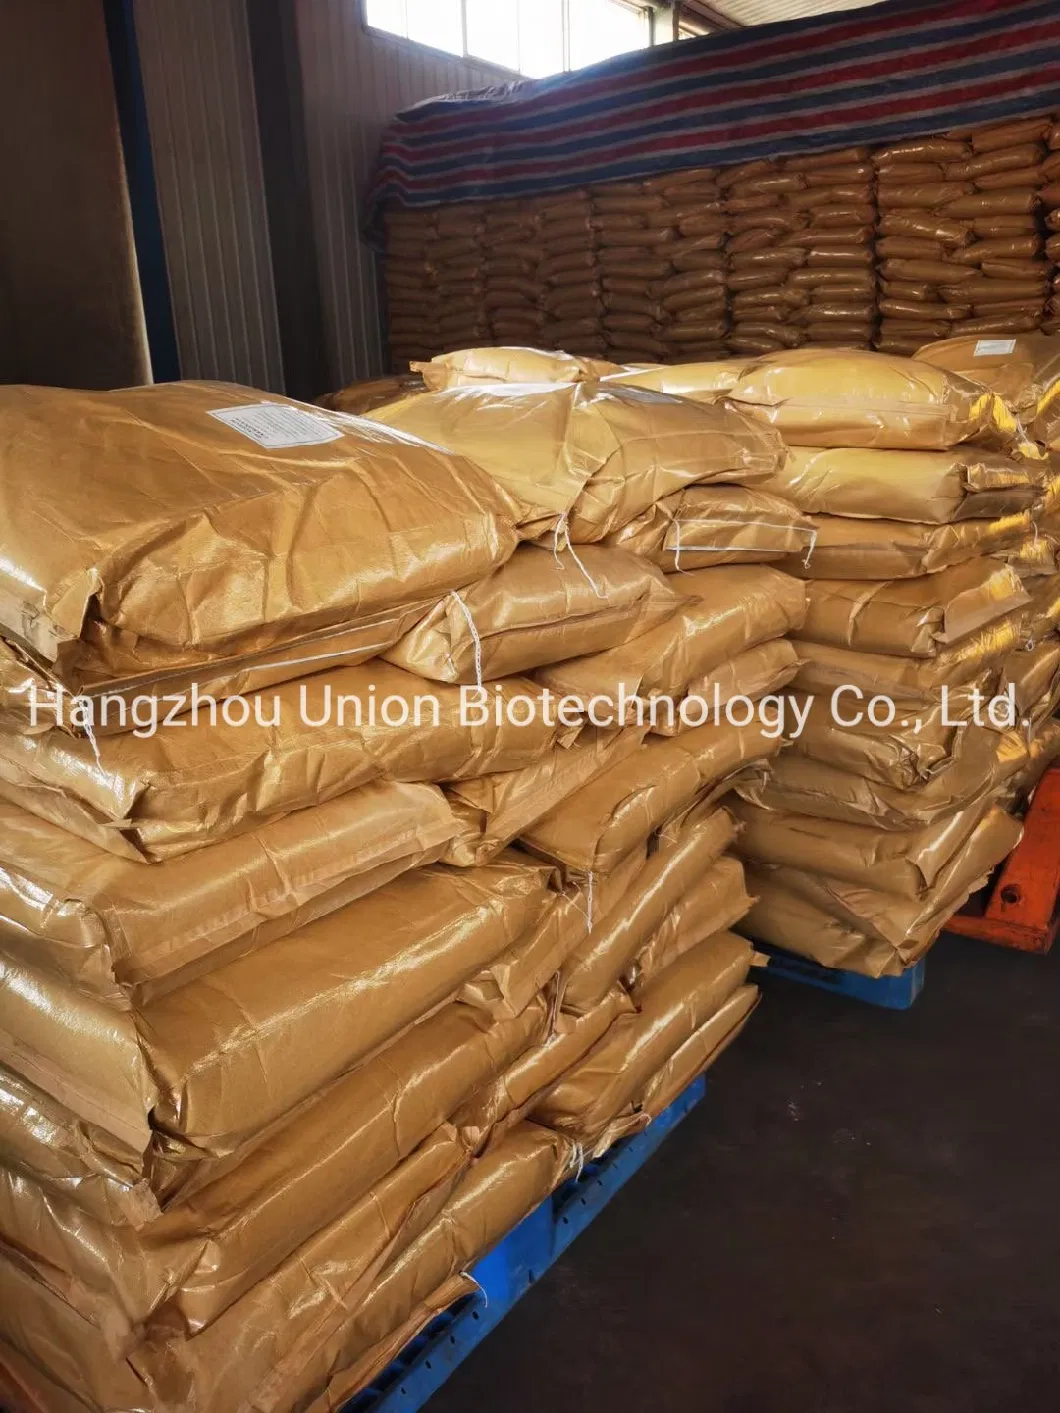 Food/Feed/Pharma Grade Glycine Powder Manufacturer in China CAS 56-40-6